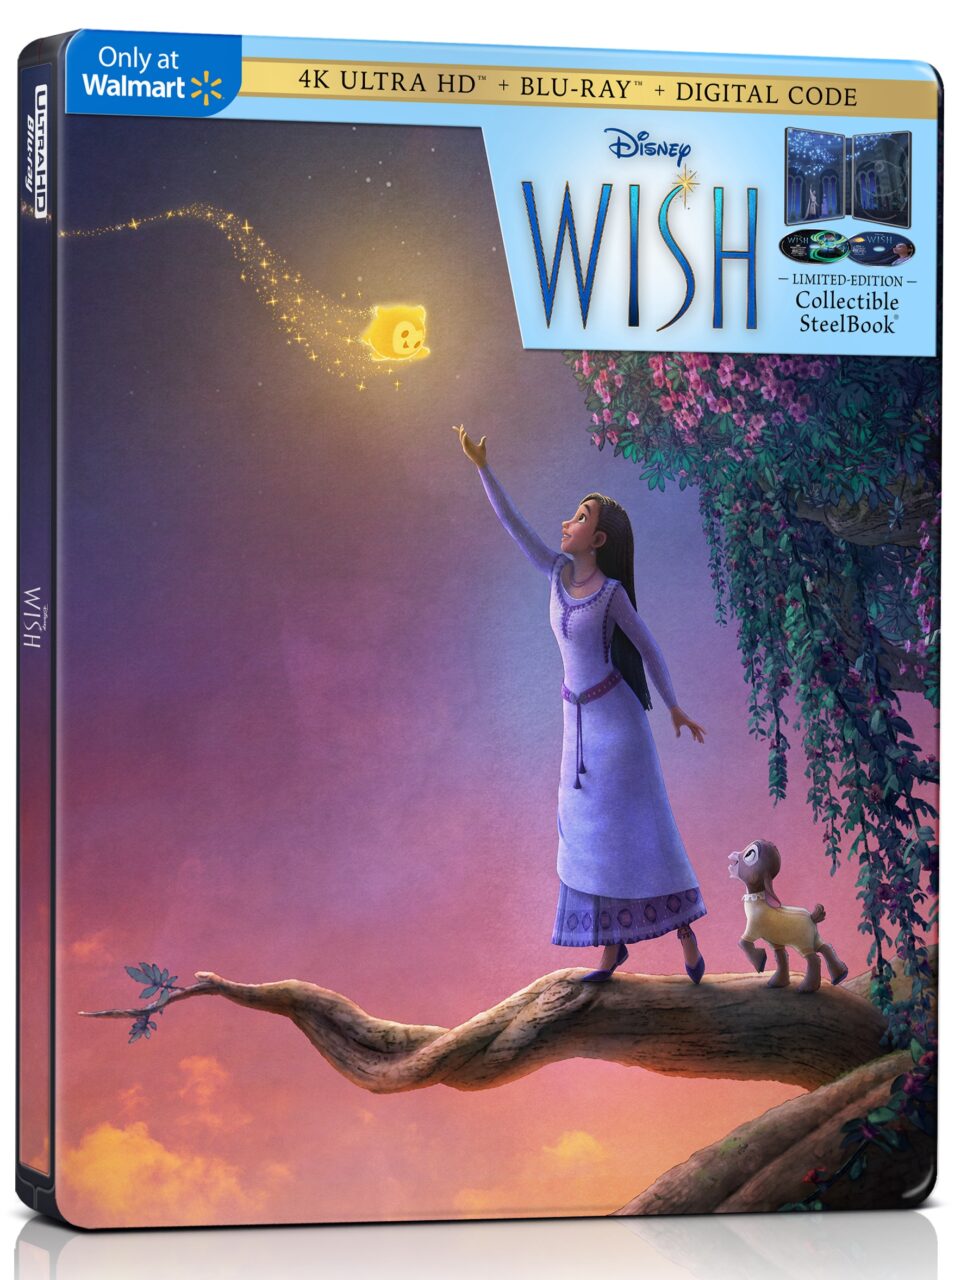 Wish 4K Ultra HD Combo Pack cover (Disney)